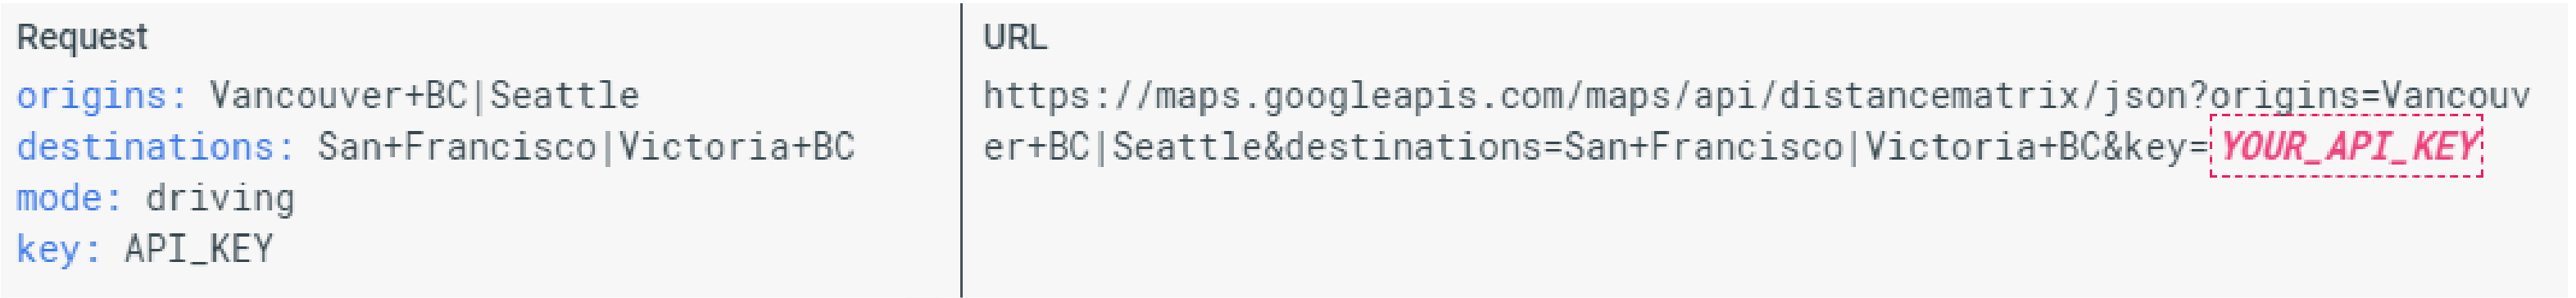 Google maps api example short